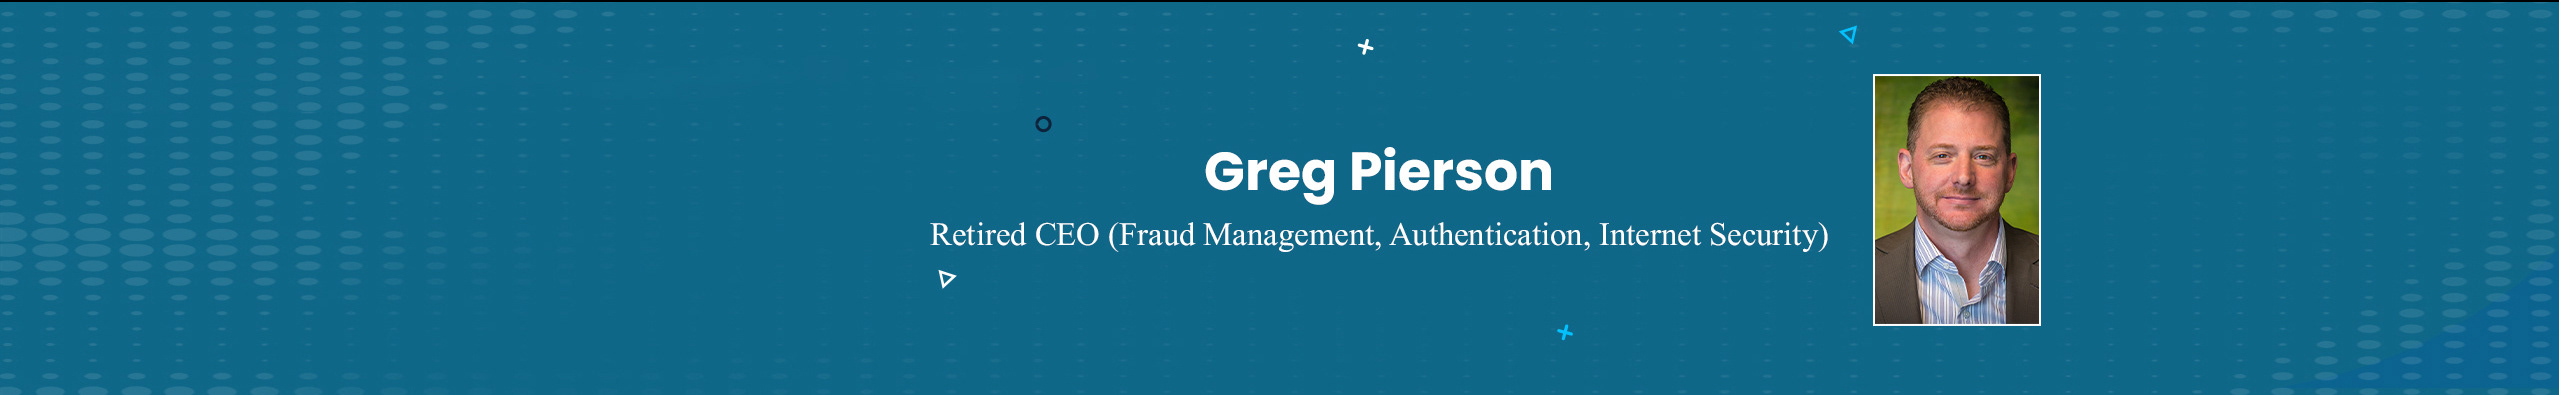 Banner de perfil de Greg Pierson